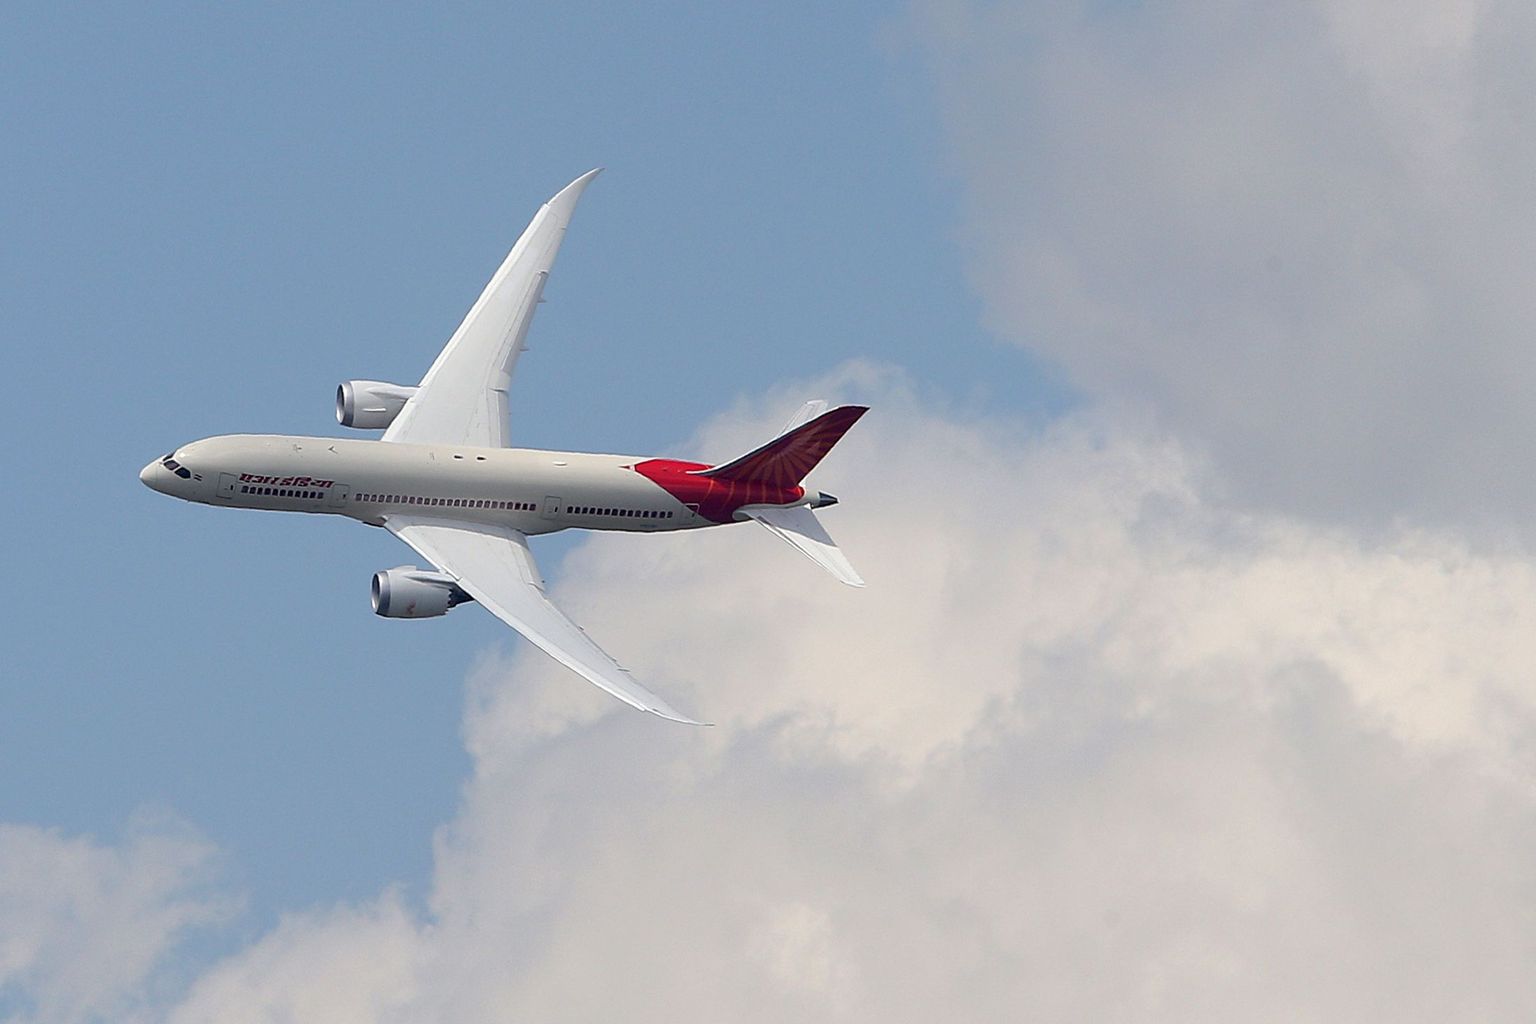 Air India Boeing 787 Dreamliner